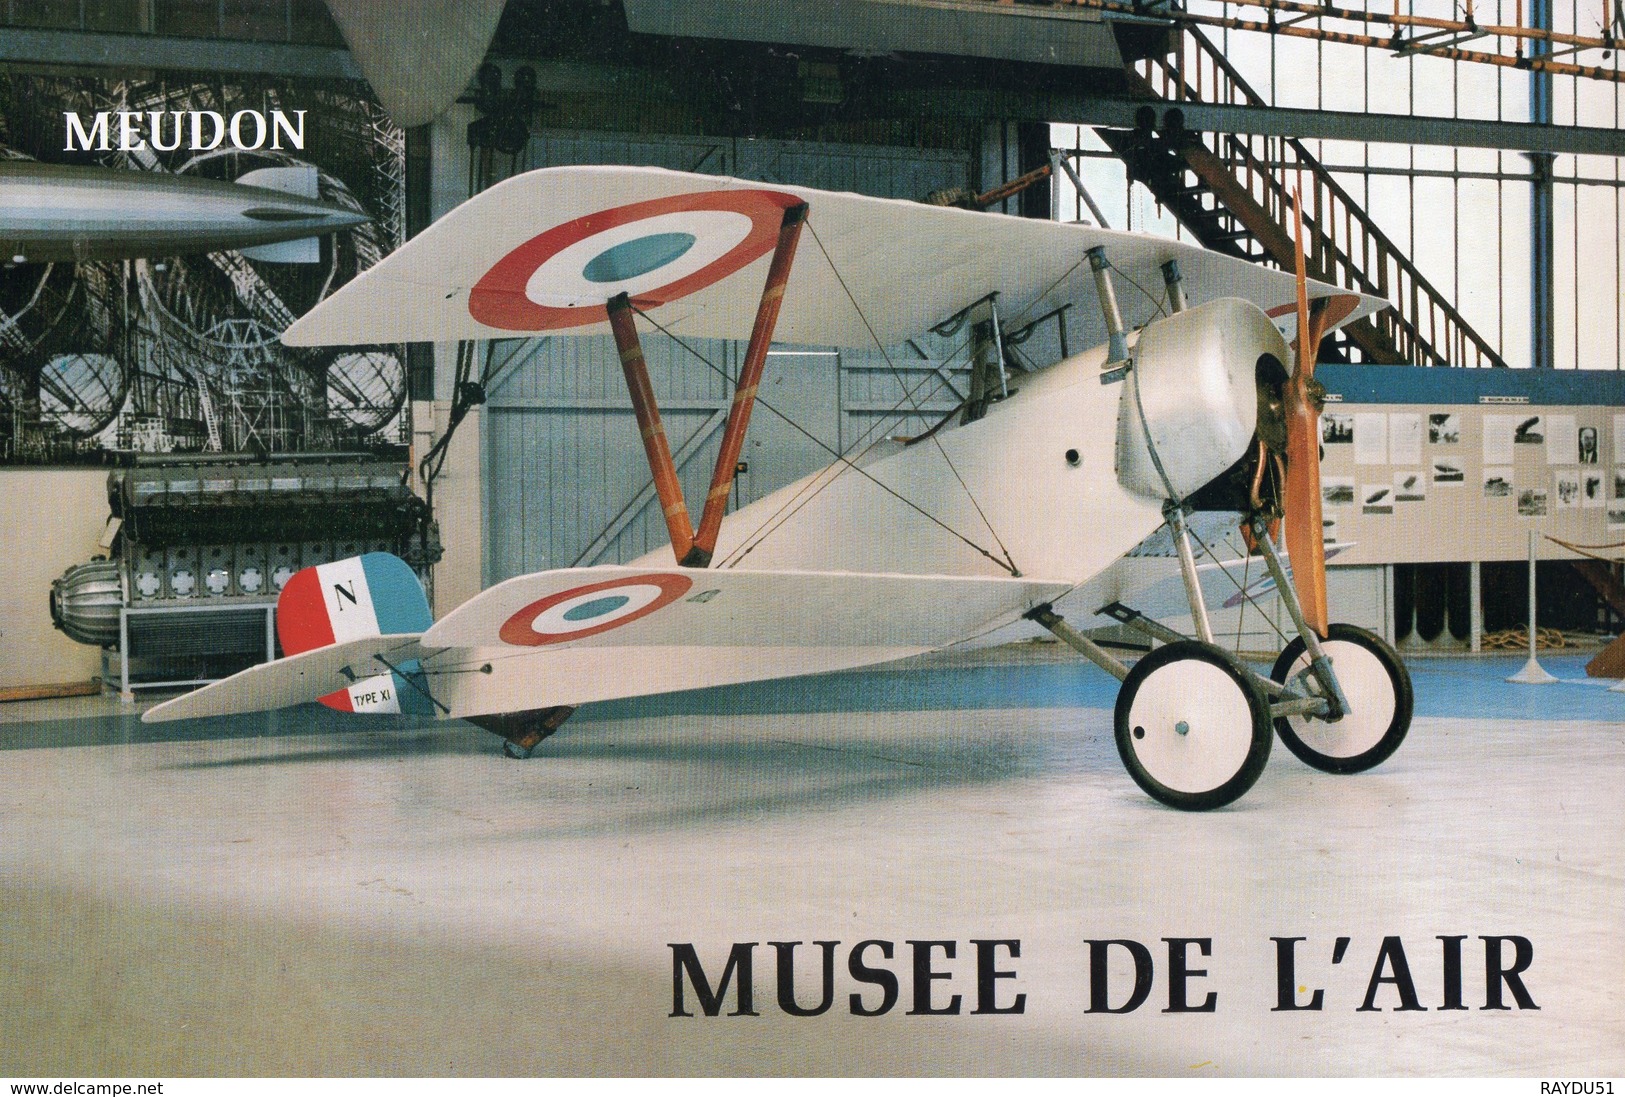 MUSEE DE L'AIR - MEUDON - Aviation